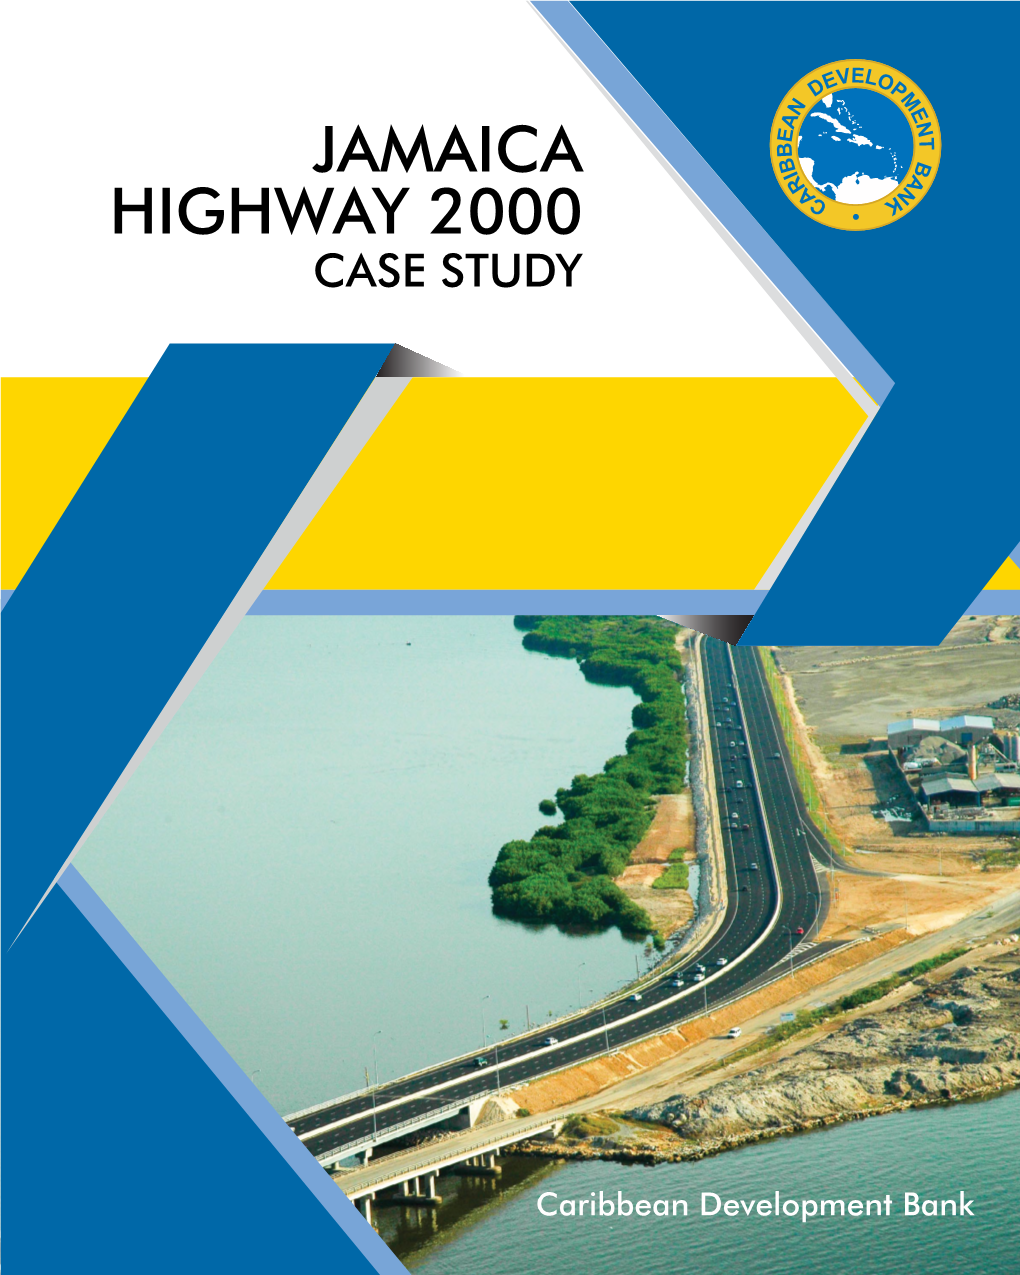 Jamaica Highway 2000 Case Study JAMAICA HIGHWAY 2000 CASE STUDY